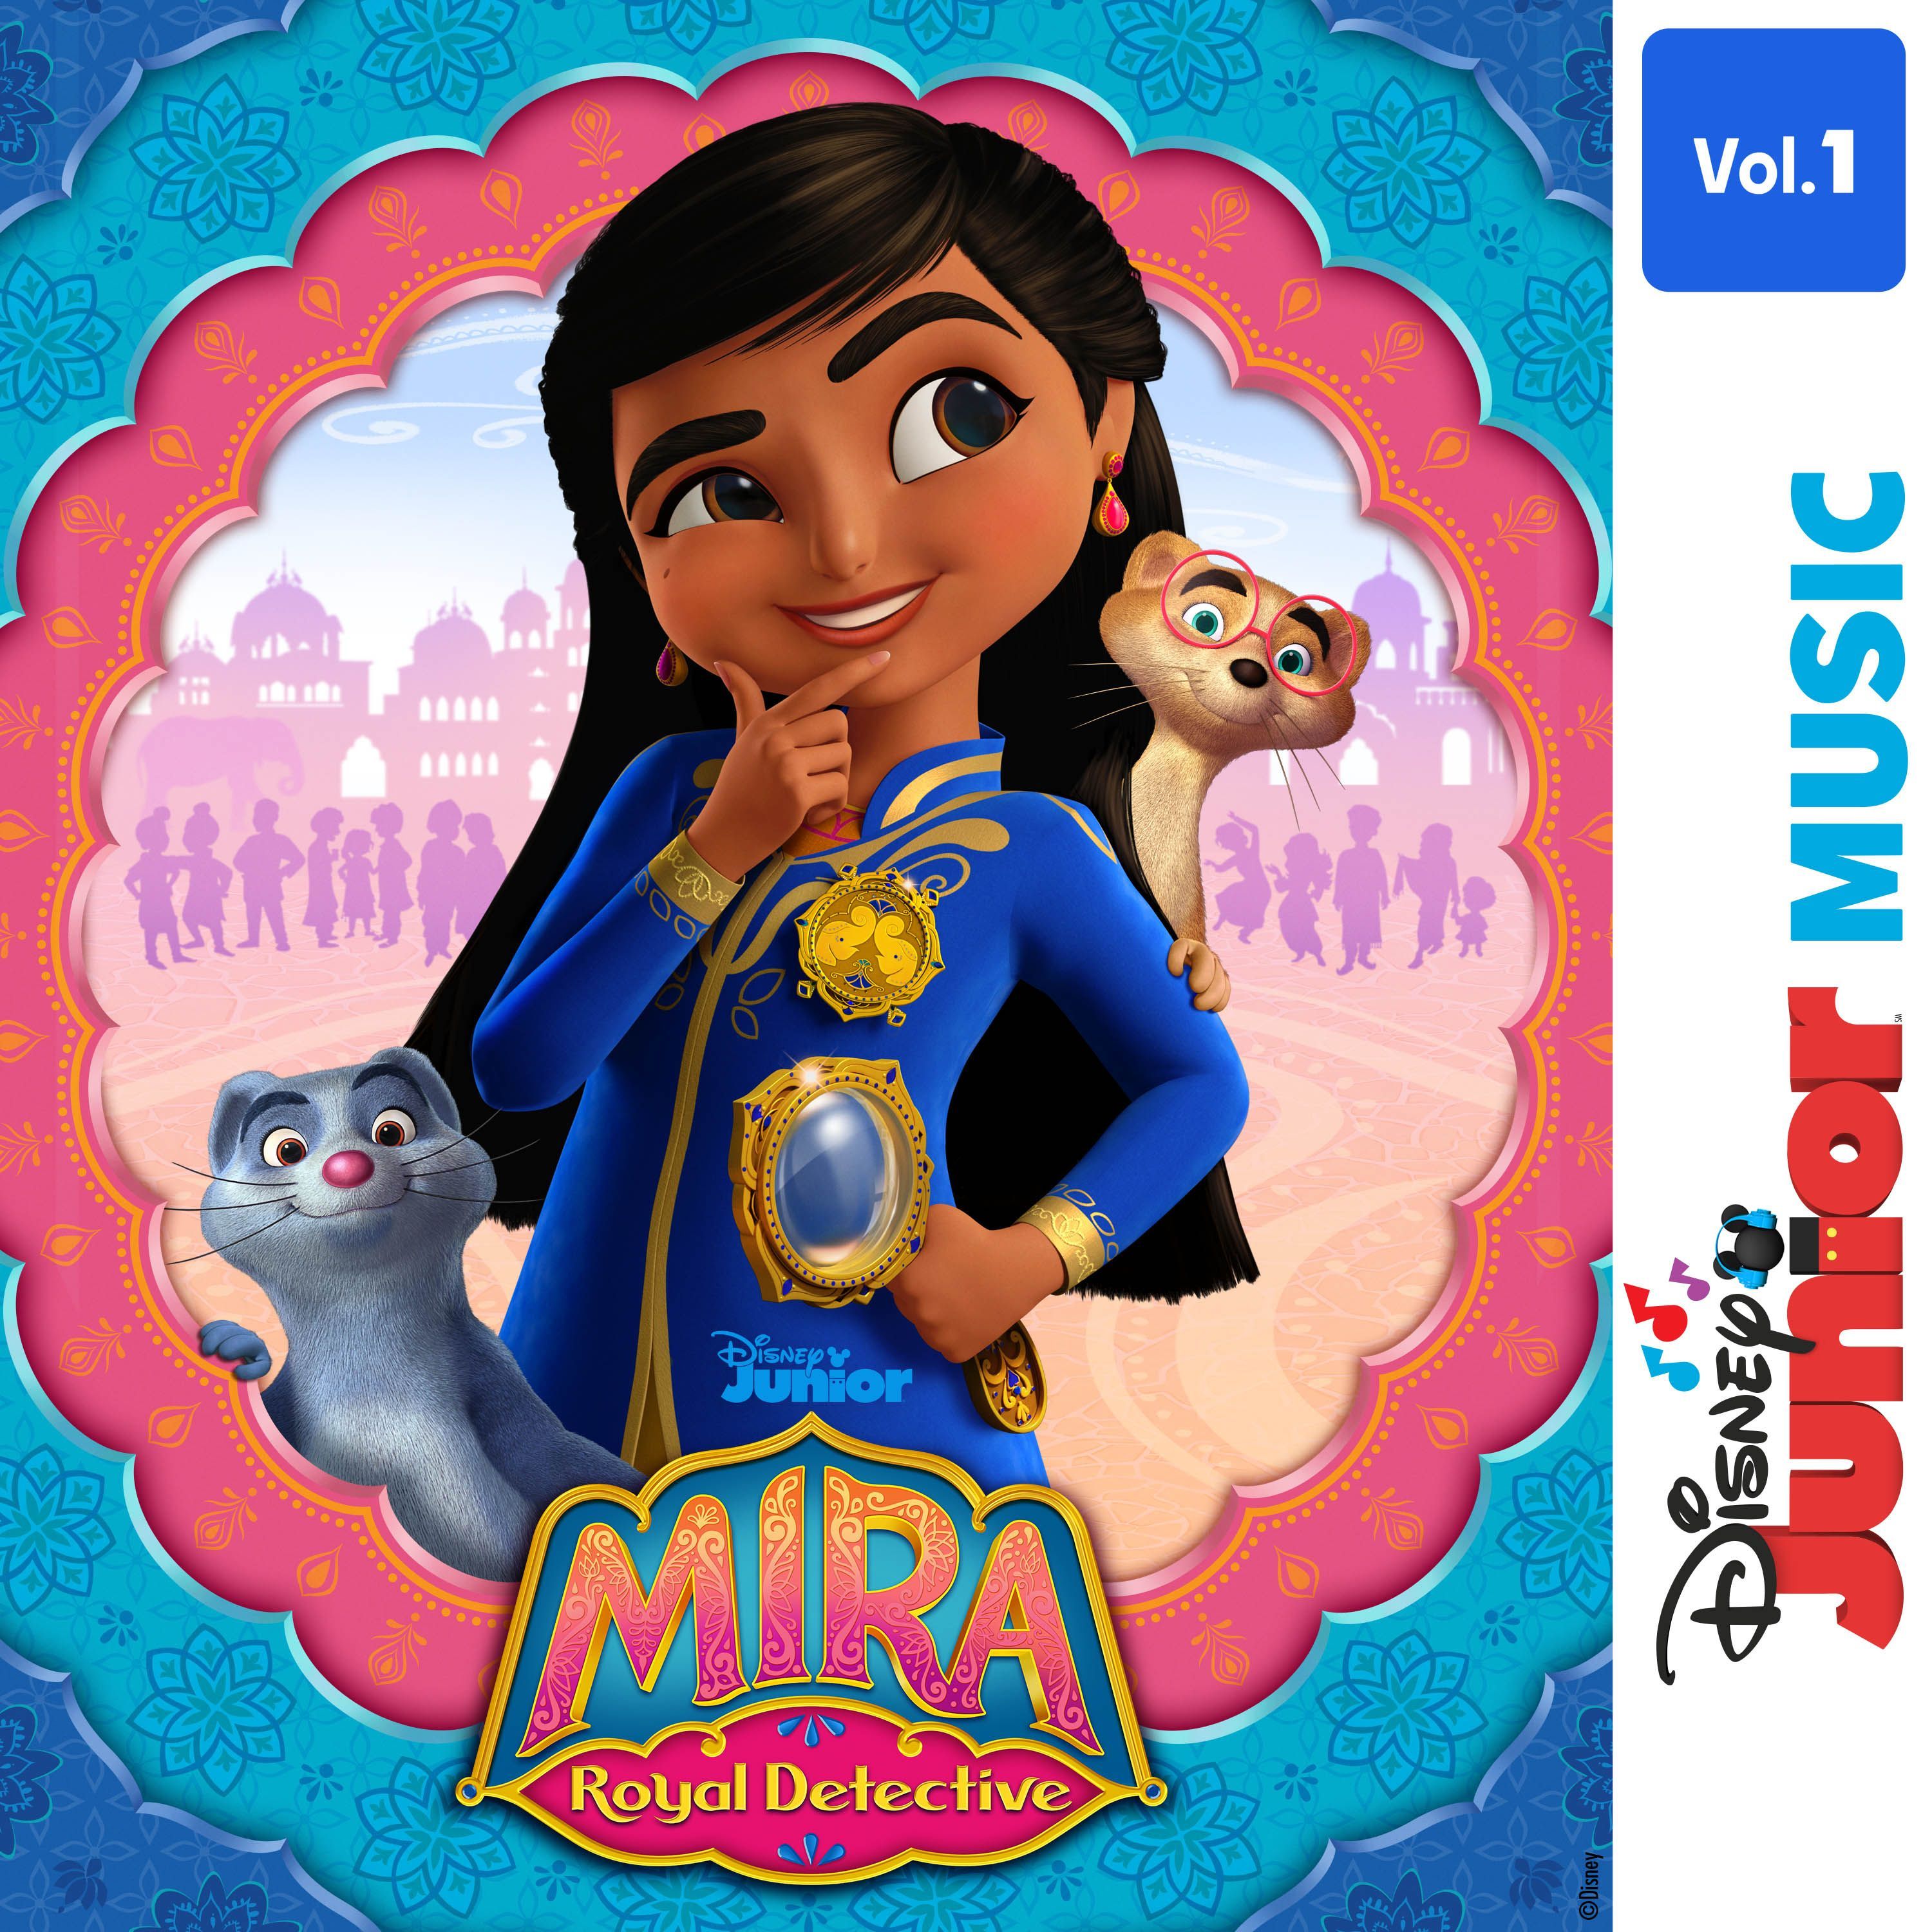 Watch Now. Mira, Royal Detective. Disney junior, Disney music, Disney princesses and princes